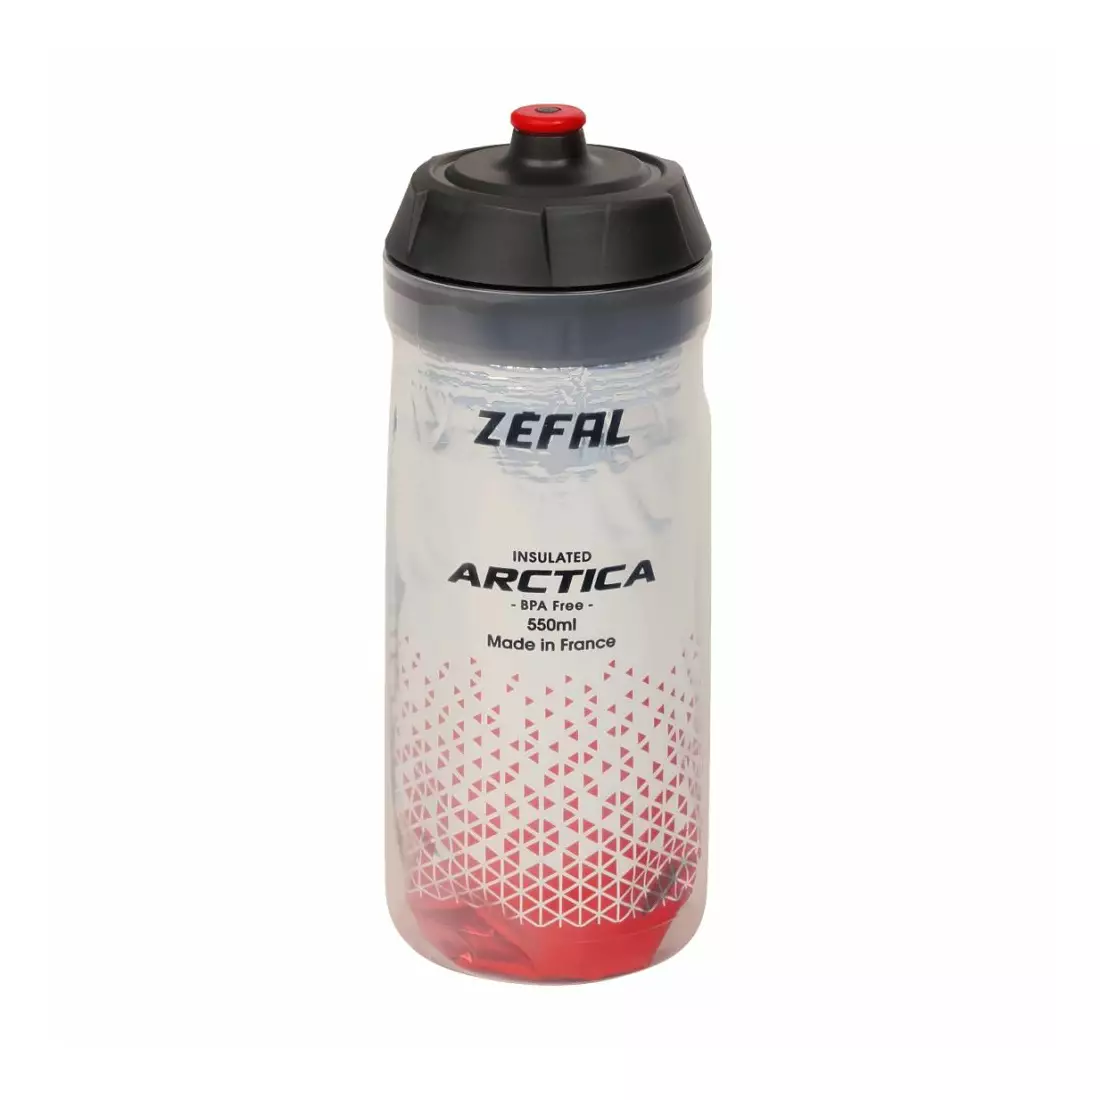 ZEFAL ARCTICA 55 Thermal bicikli palack, ezüst-piros, 550ml 